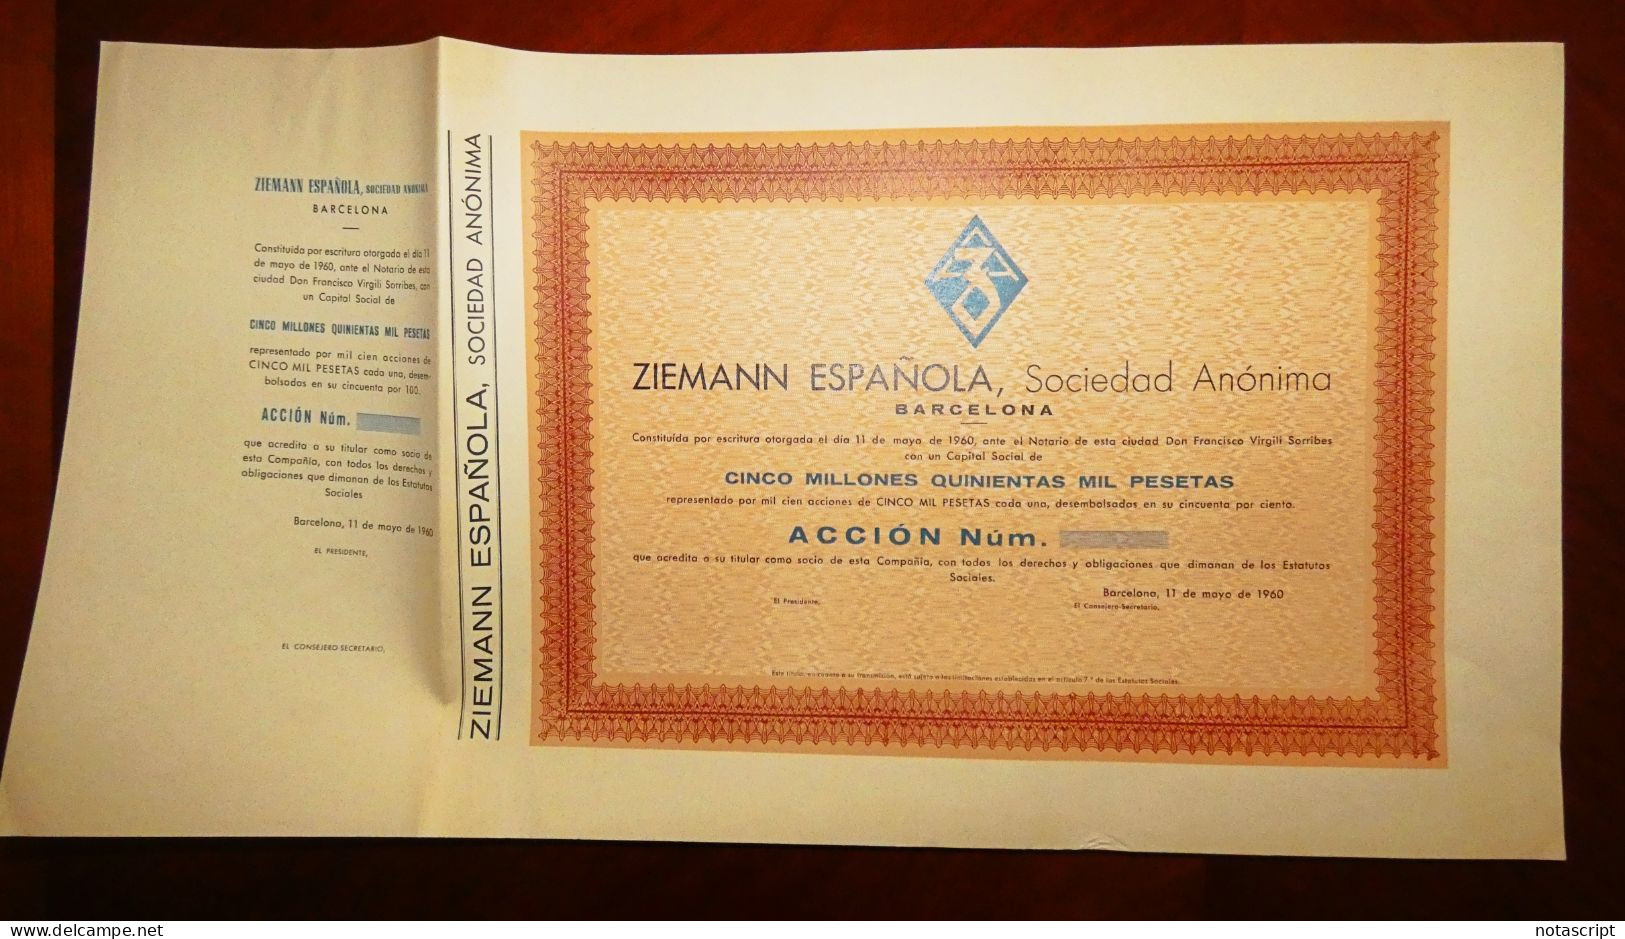 Ziemann Española SA, Barcelona 1960, Share Certificate - Industrial